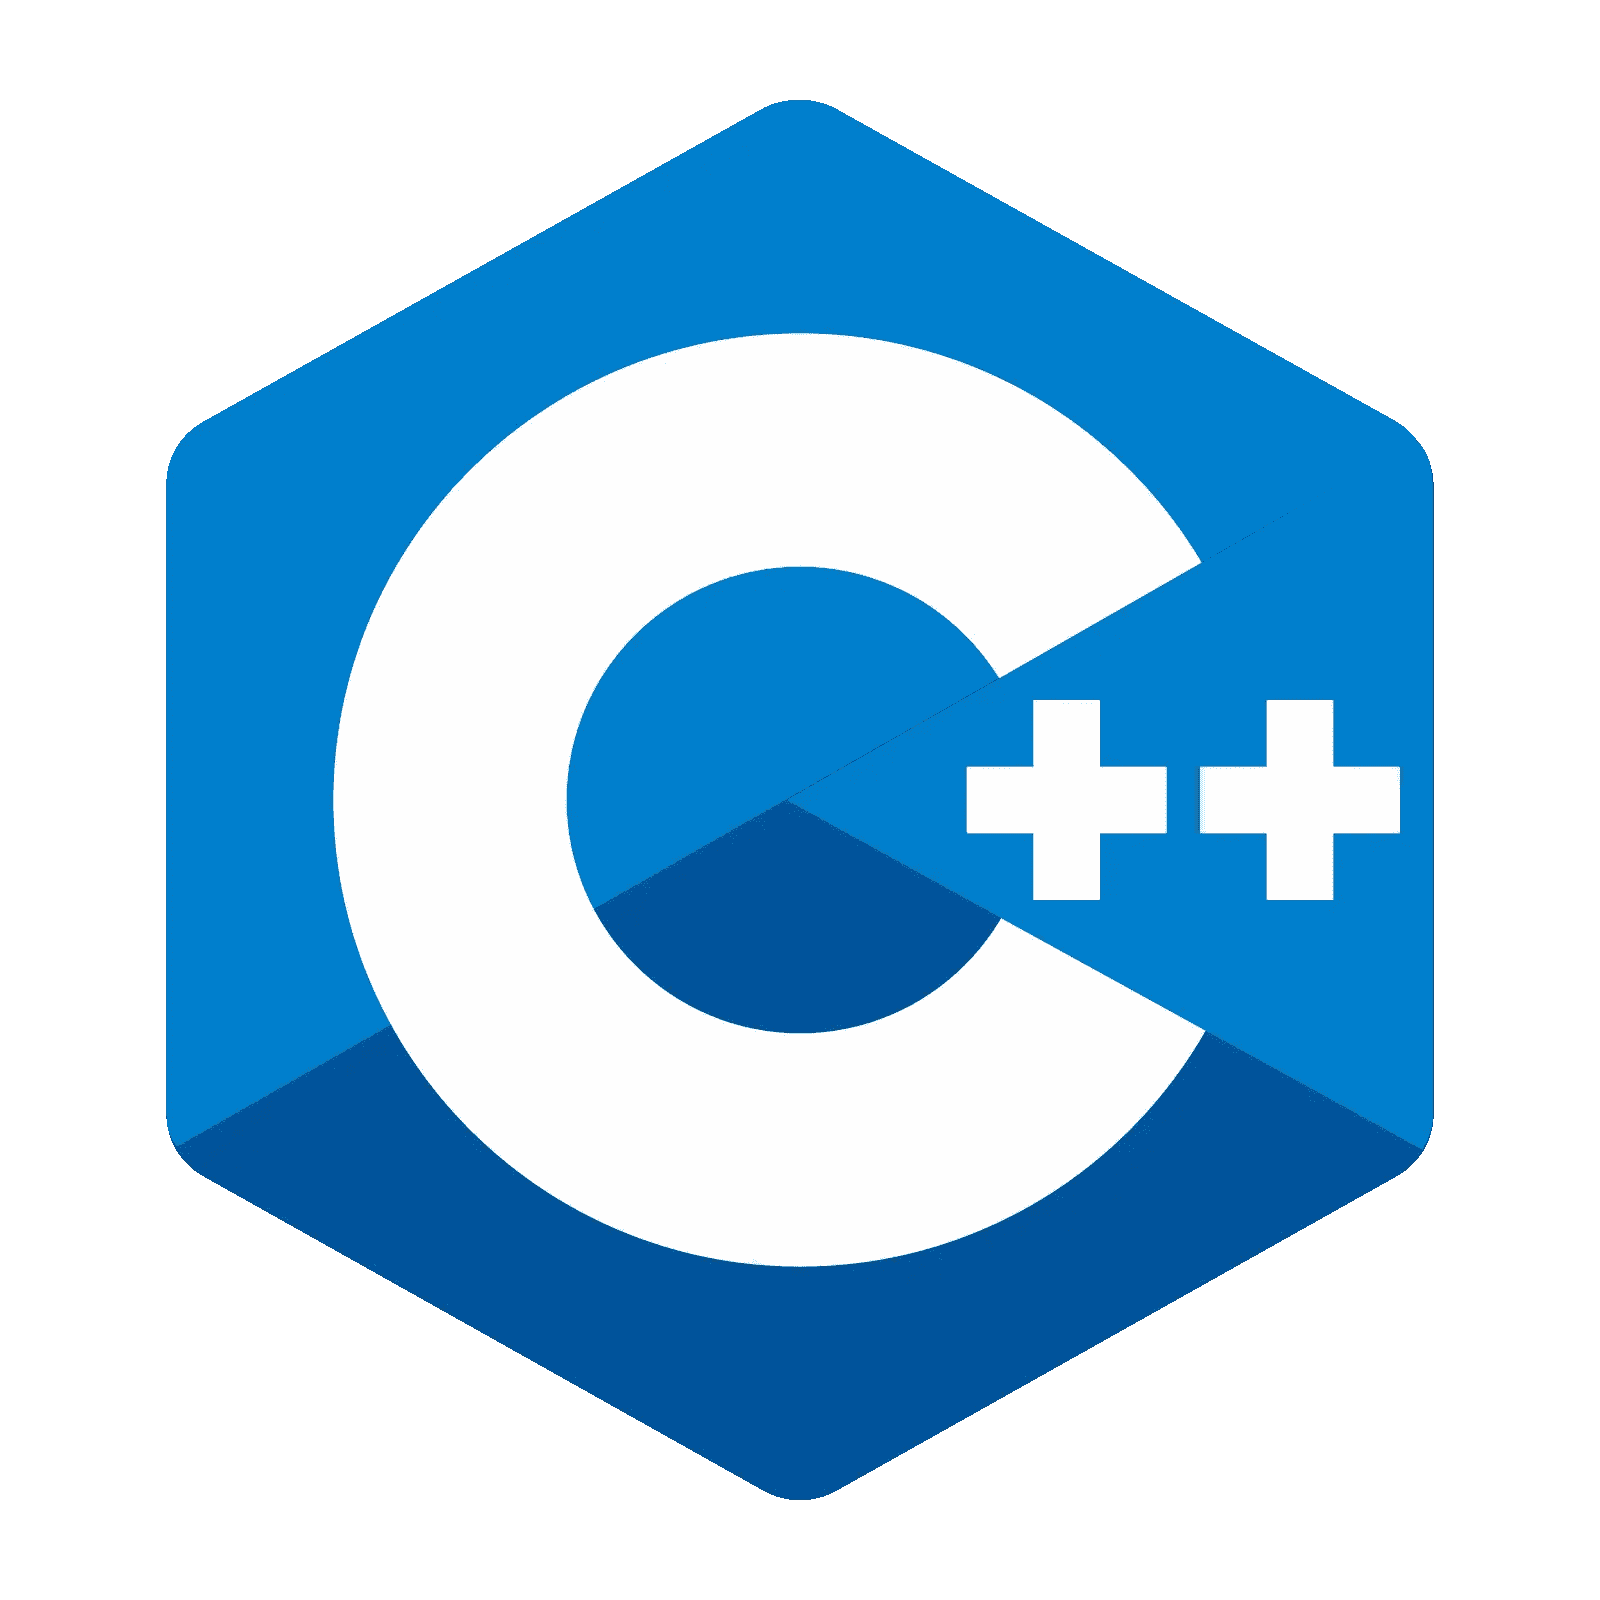 C++Image